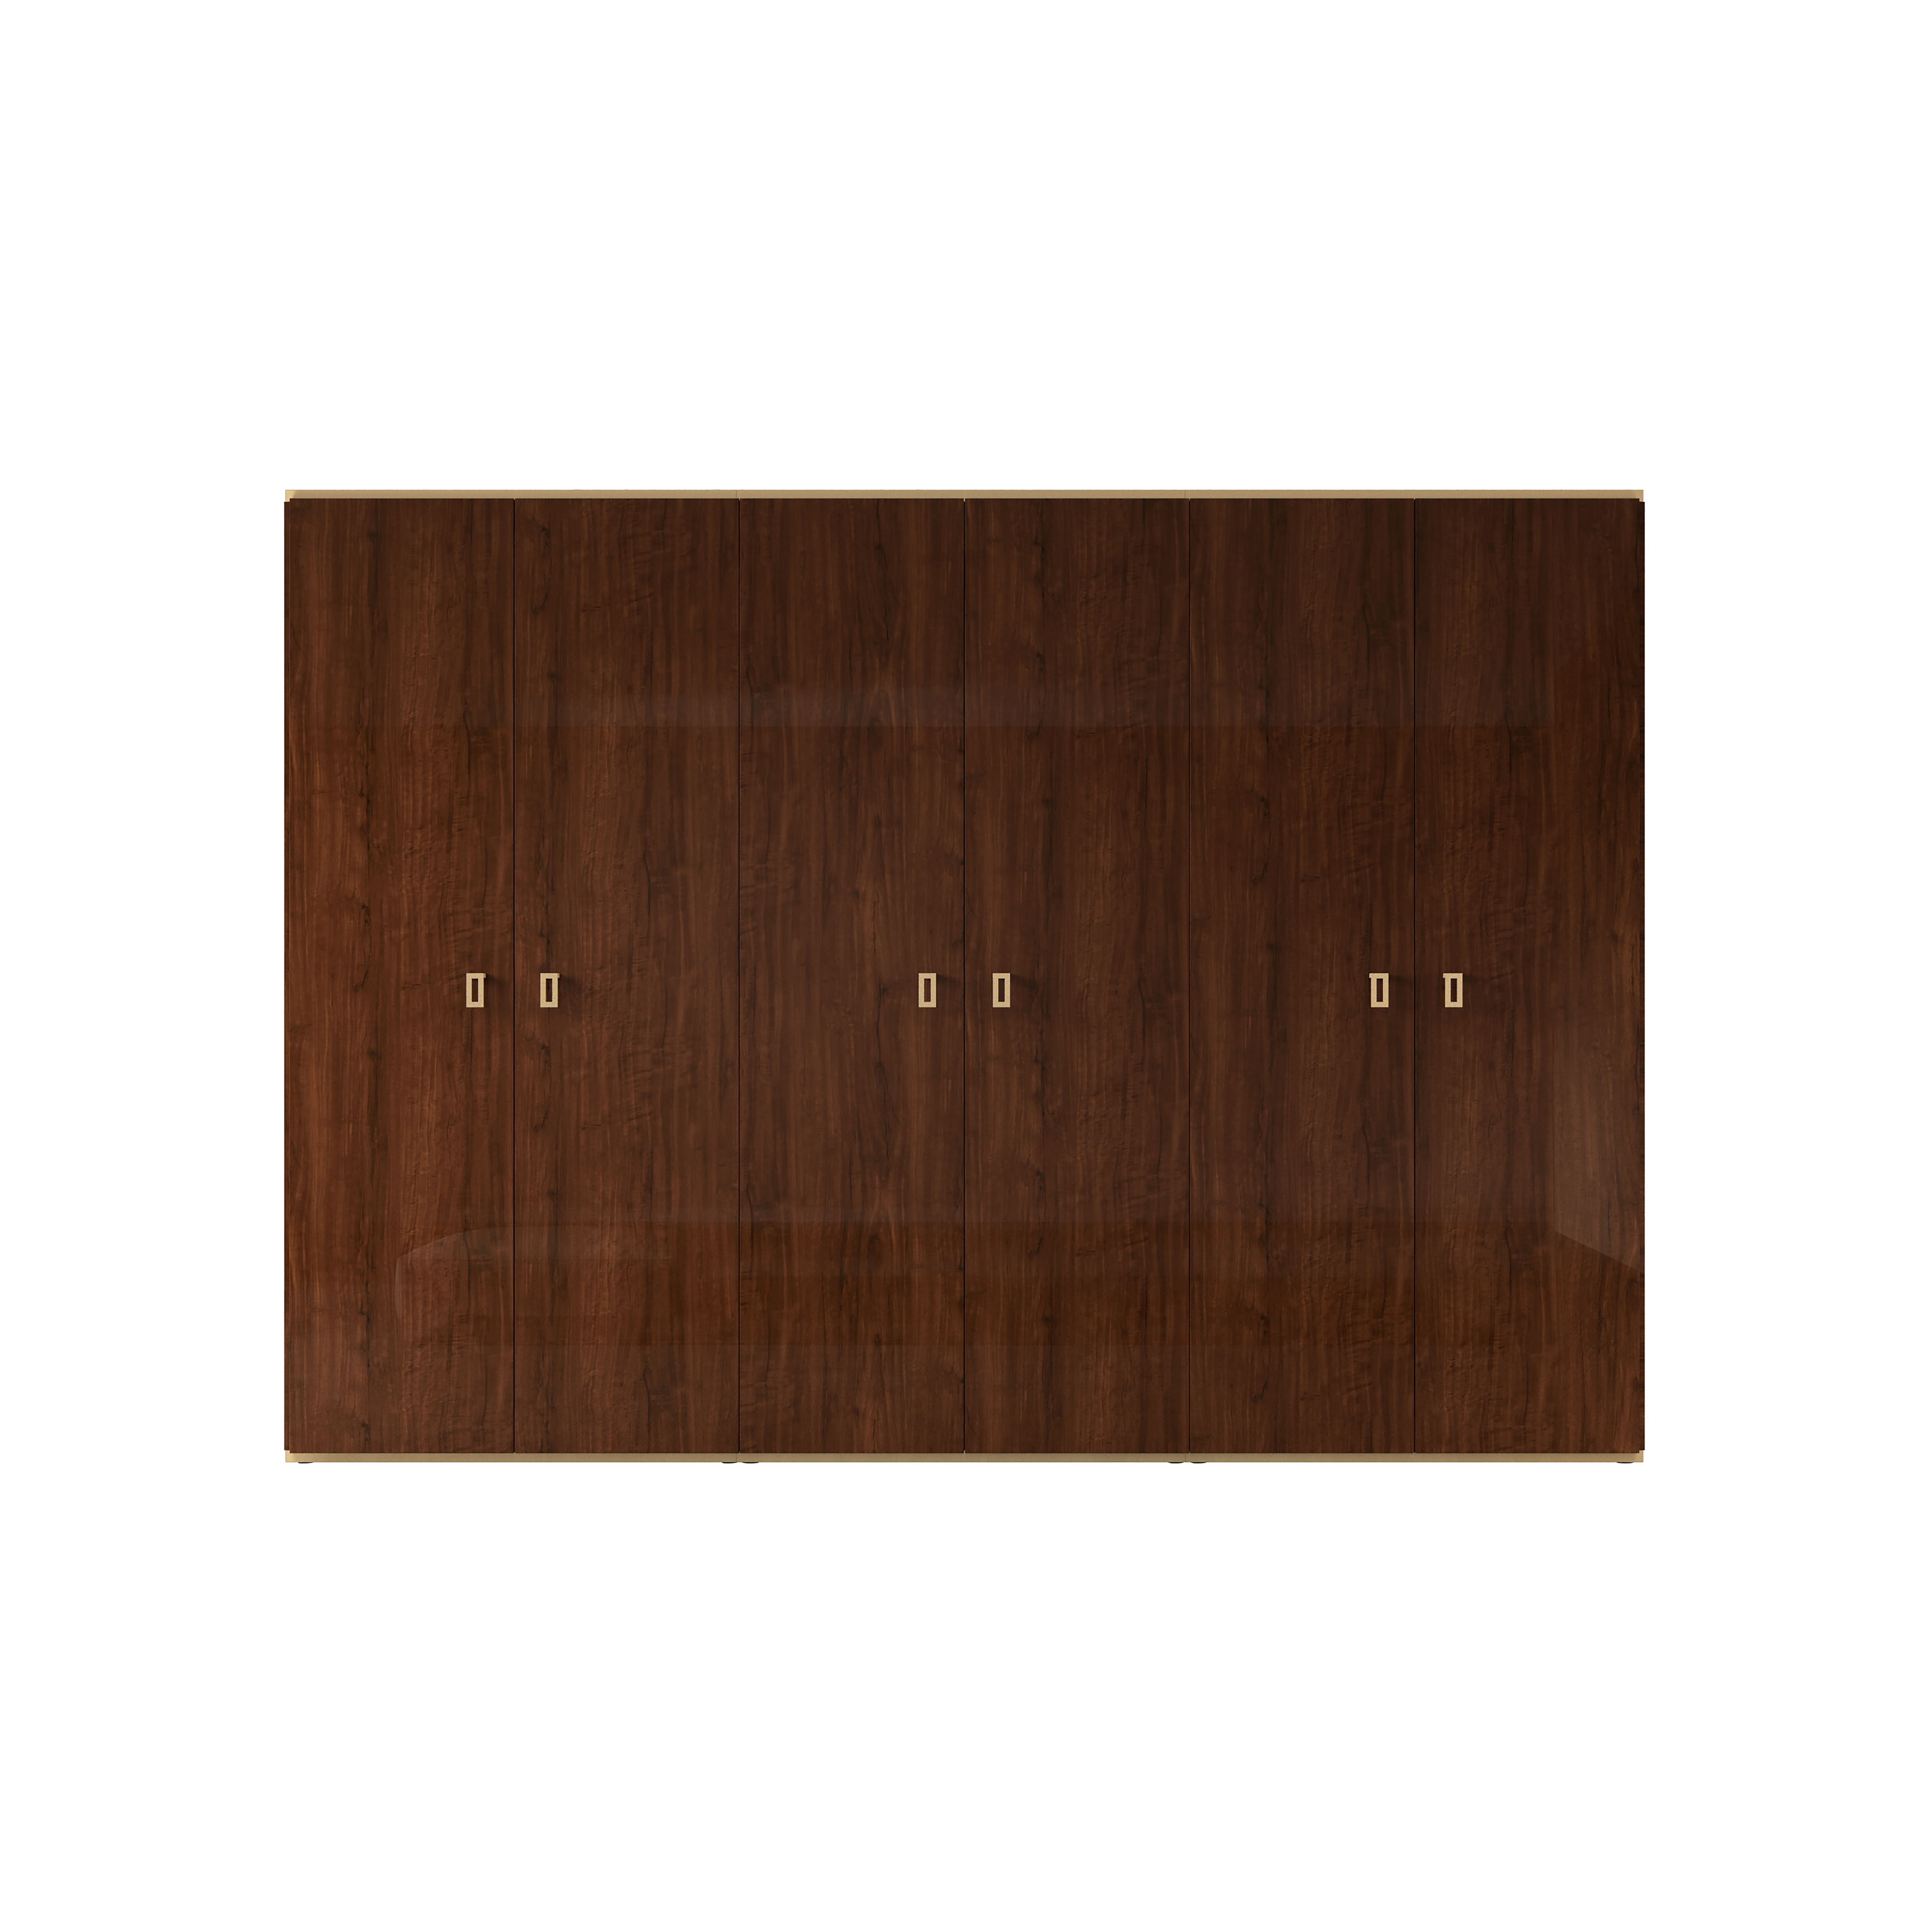 Шкаф Status Eva, шестидверный, цвет орех, 324x61x232 см (EABNOAR03)EABNOAR03